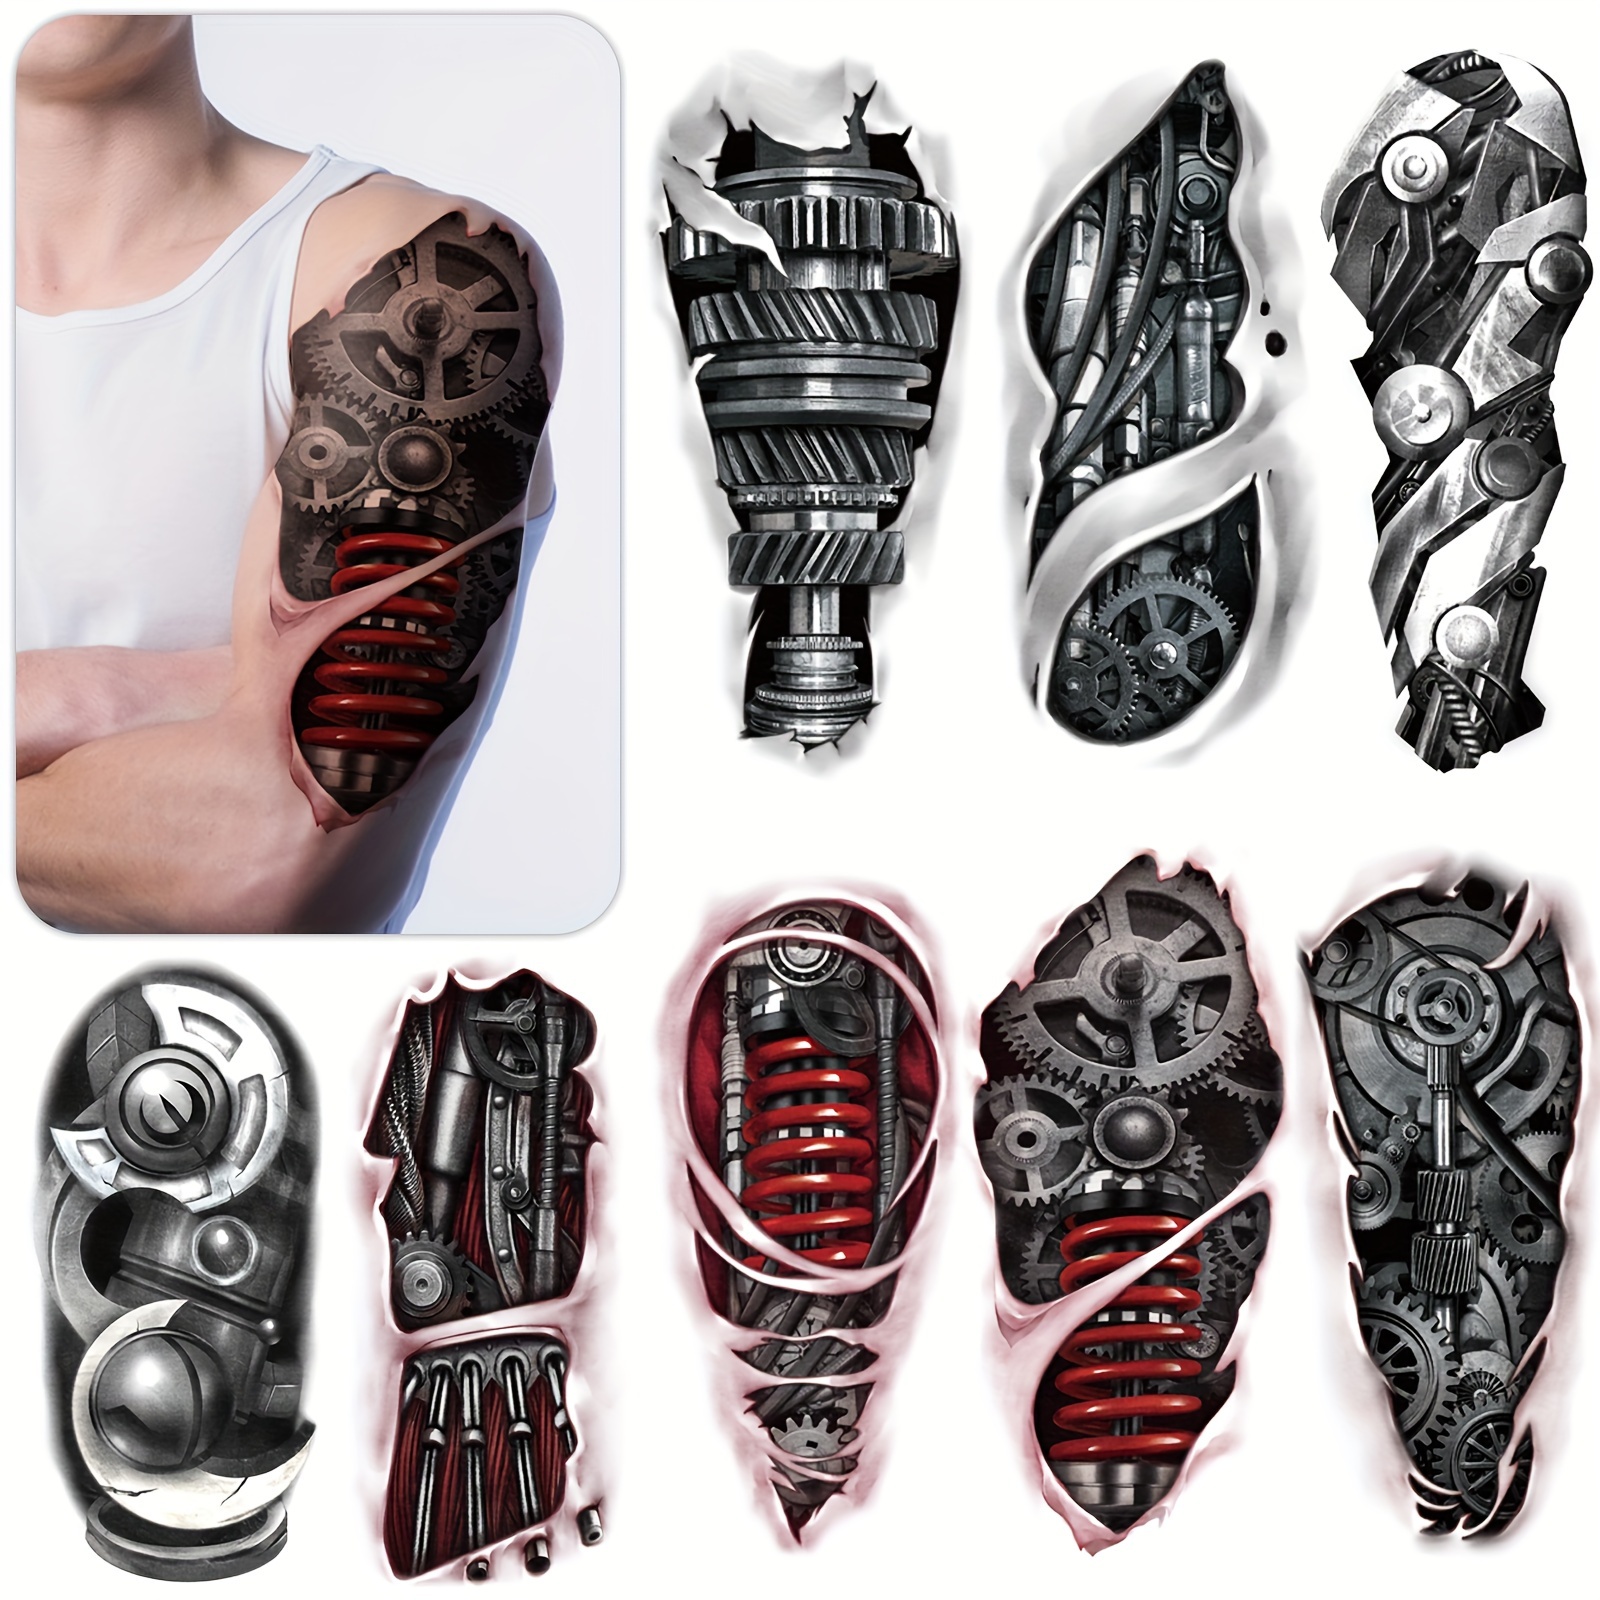 

Yazhiji 17-sheet Realistic 3d Robot Temporary Tattoos - Waterproof, Long-lasting Fake Tattoo Stickers For Men & Women